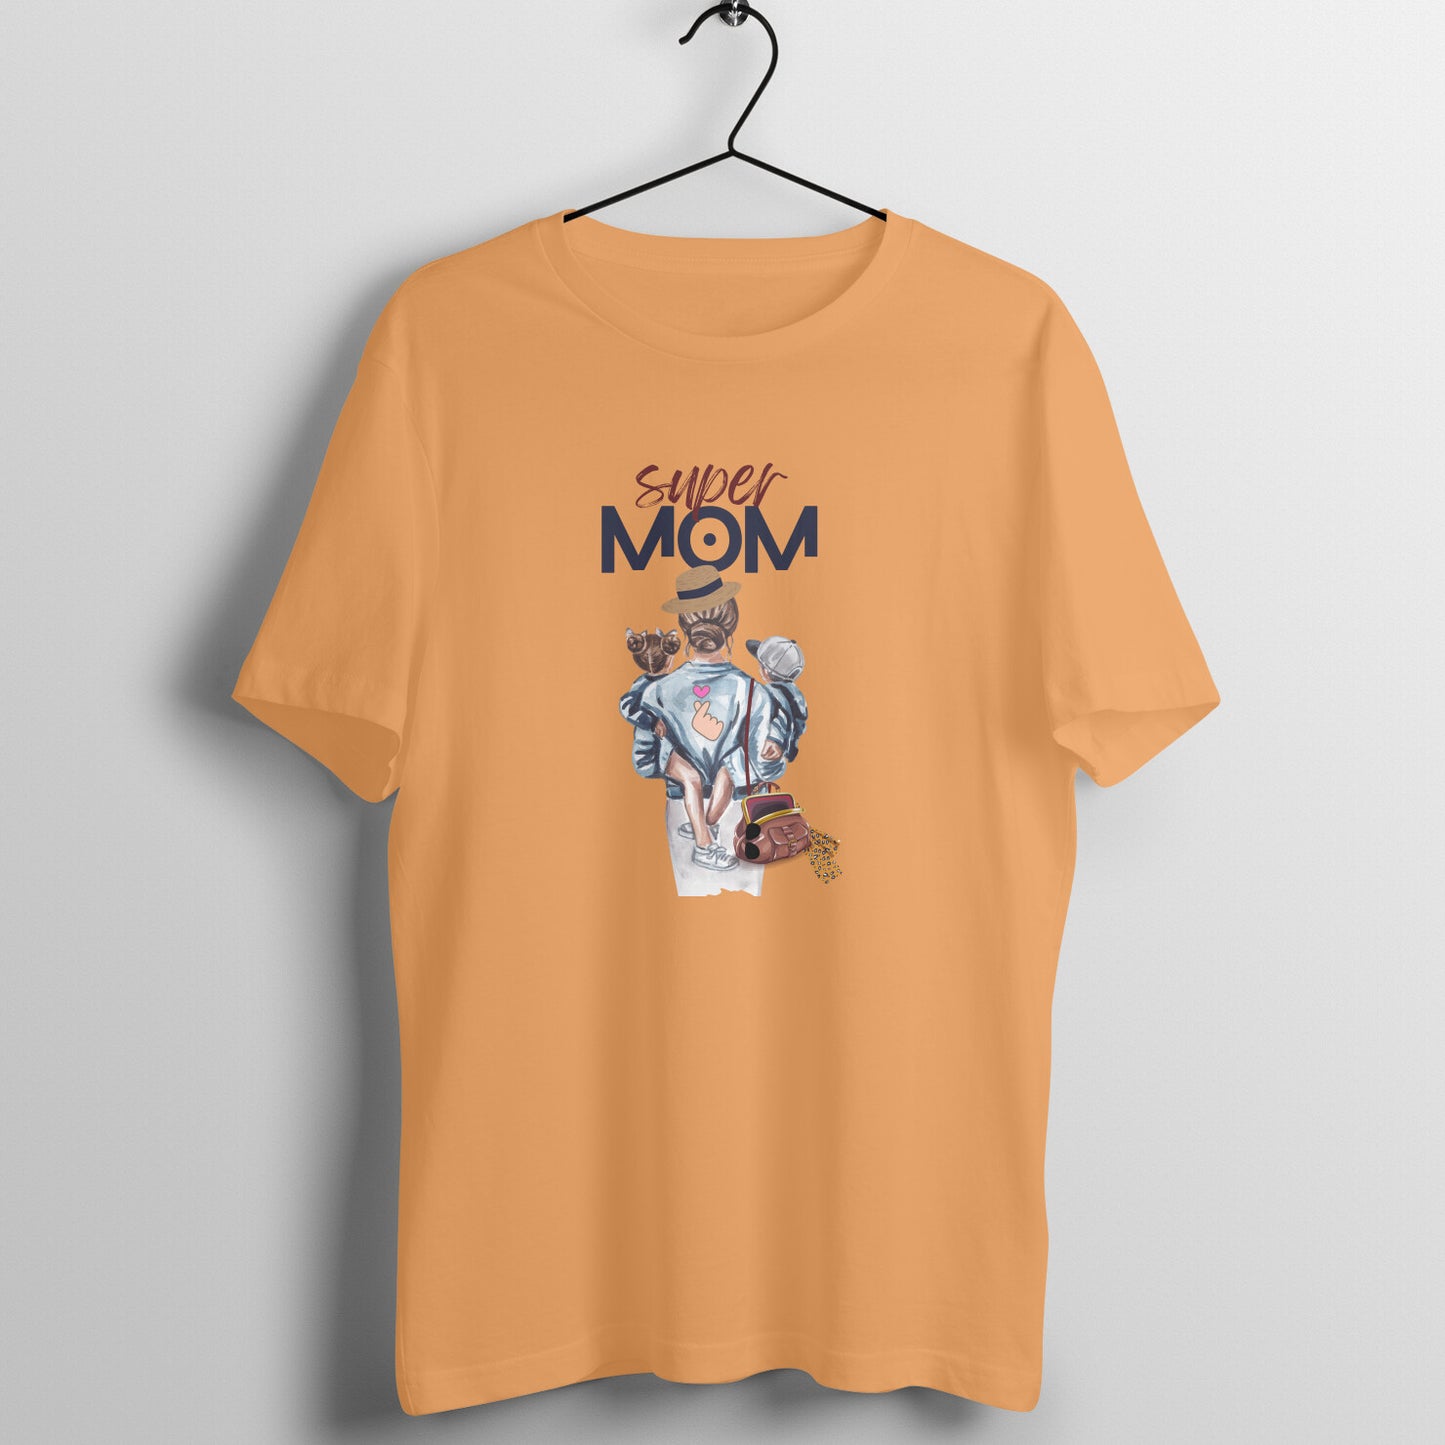 Super Mom- Oversized Women's tee